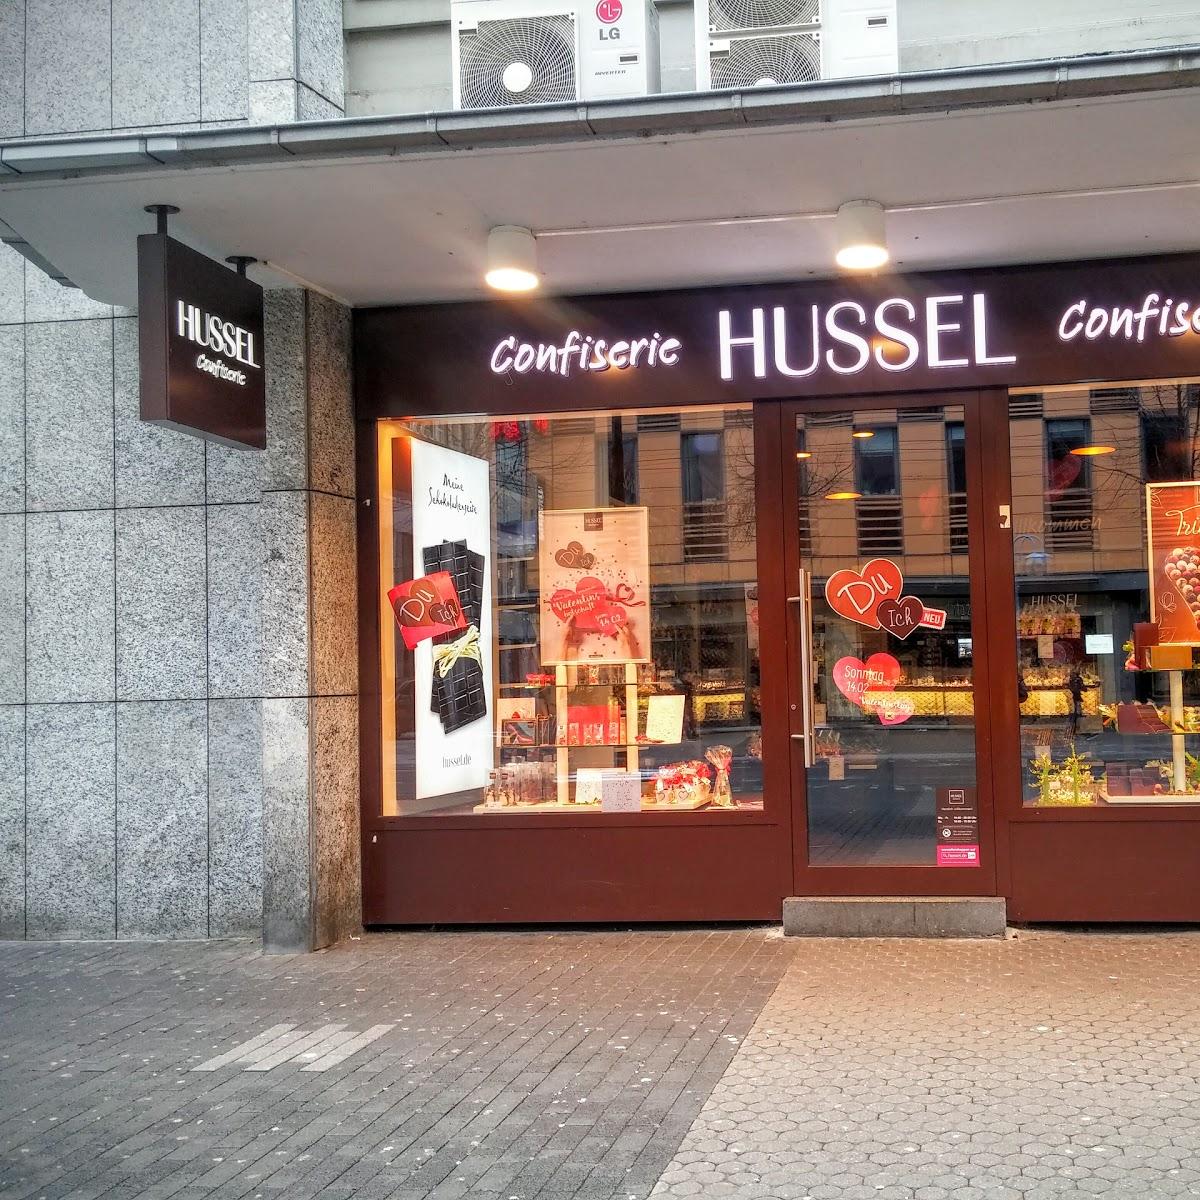 Restaurant "HUSSEL Confiserie" in Mannheim